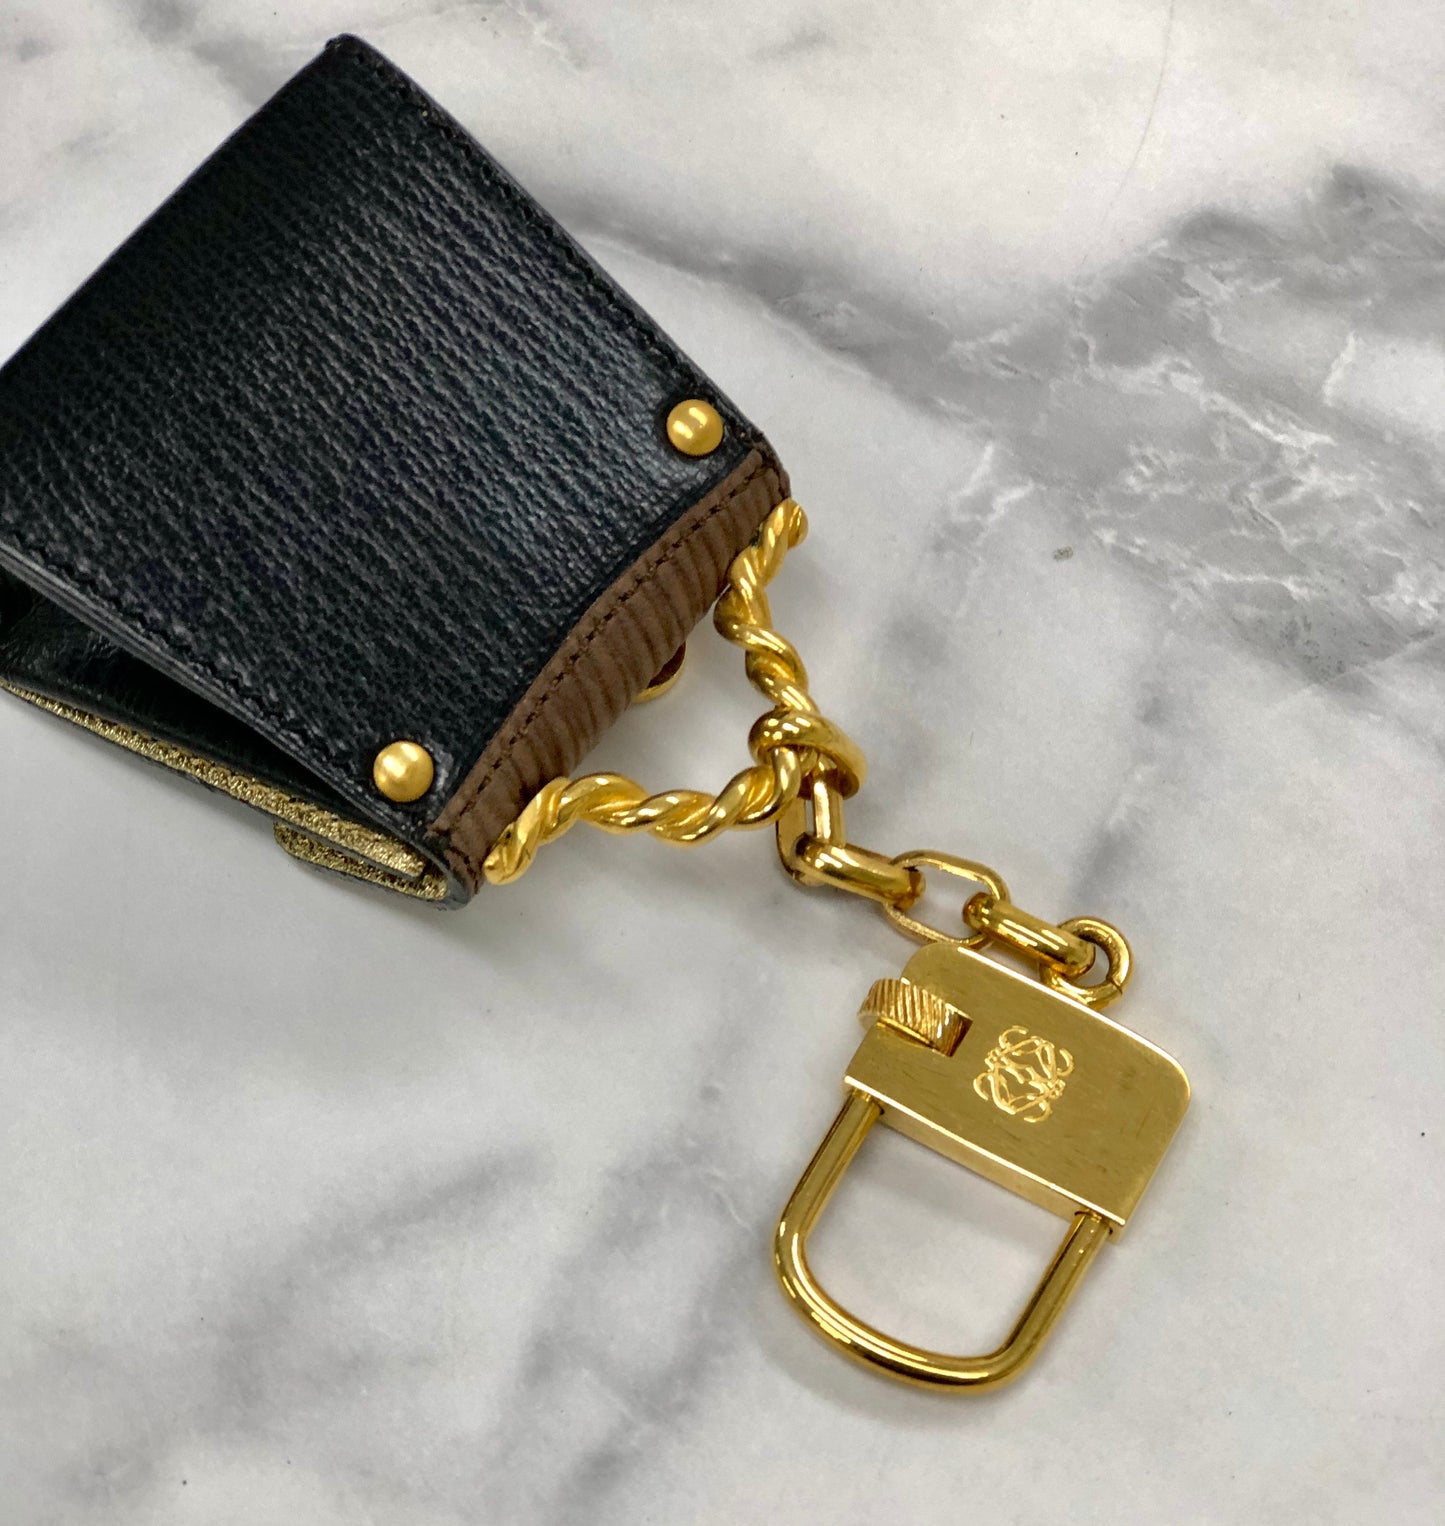 LOEWE Velazquez Anagram Handbag type Bag charm Key chain Black Vintage Old v7w53z